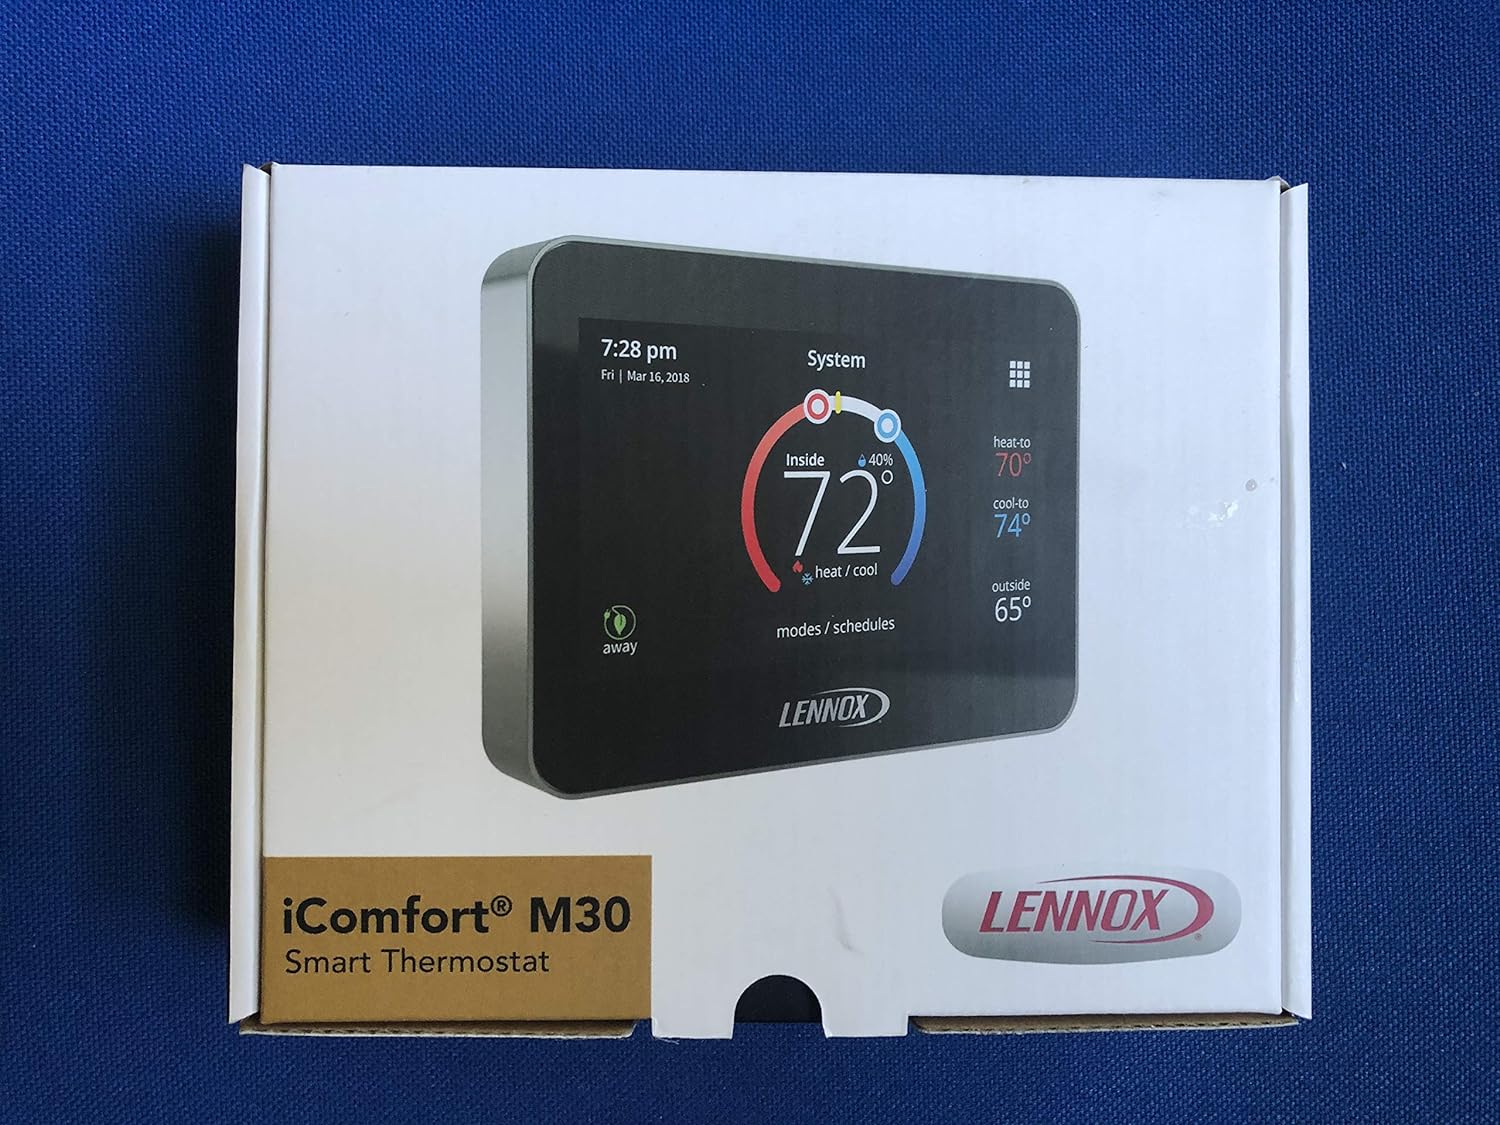 Lennox 15Z69 iComfort M30